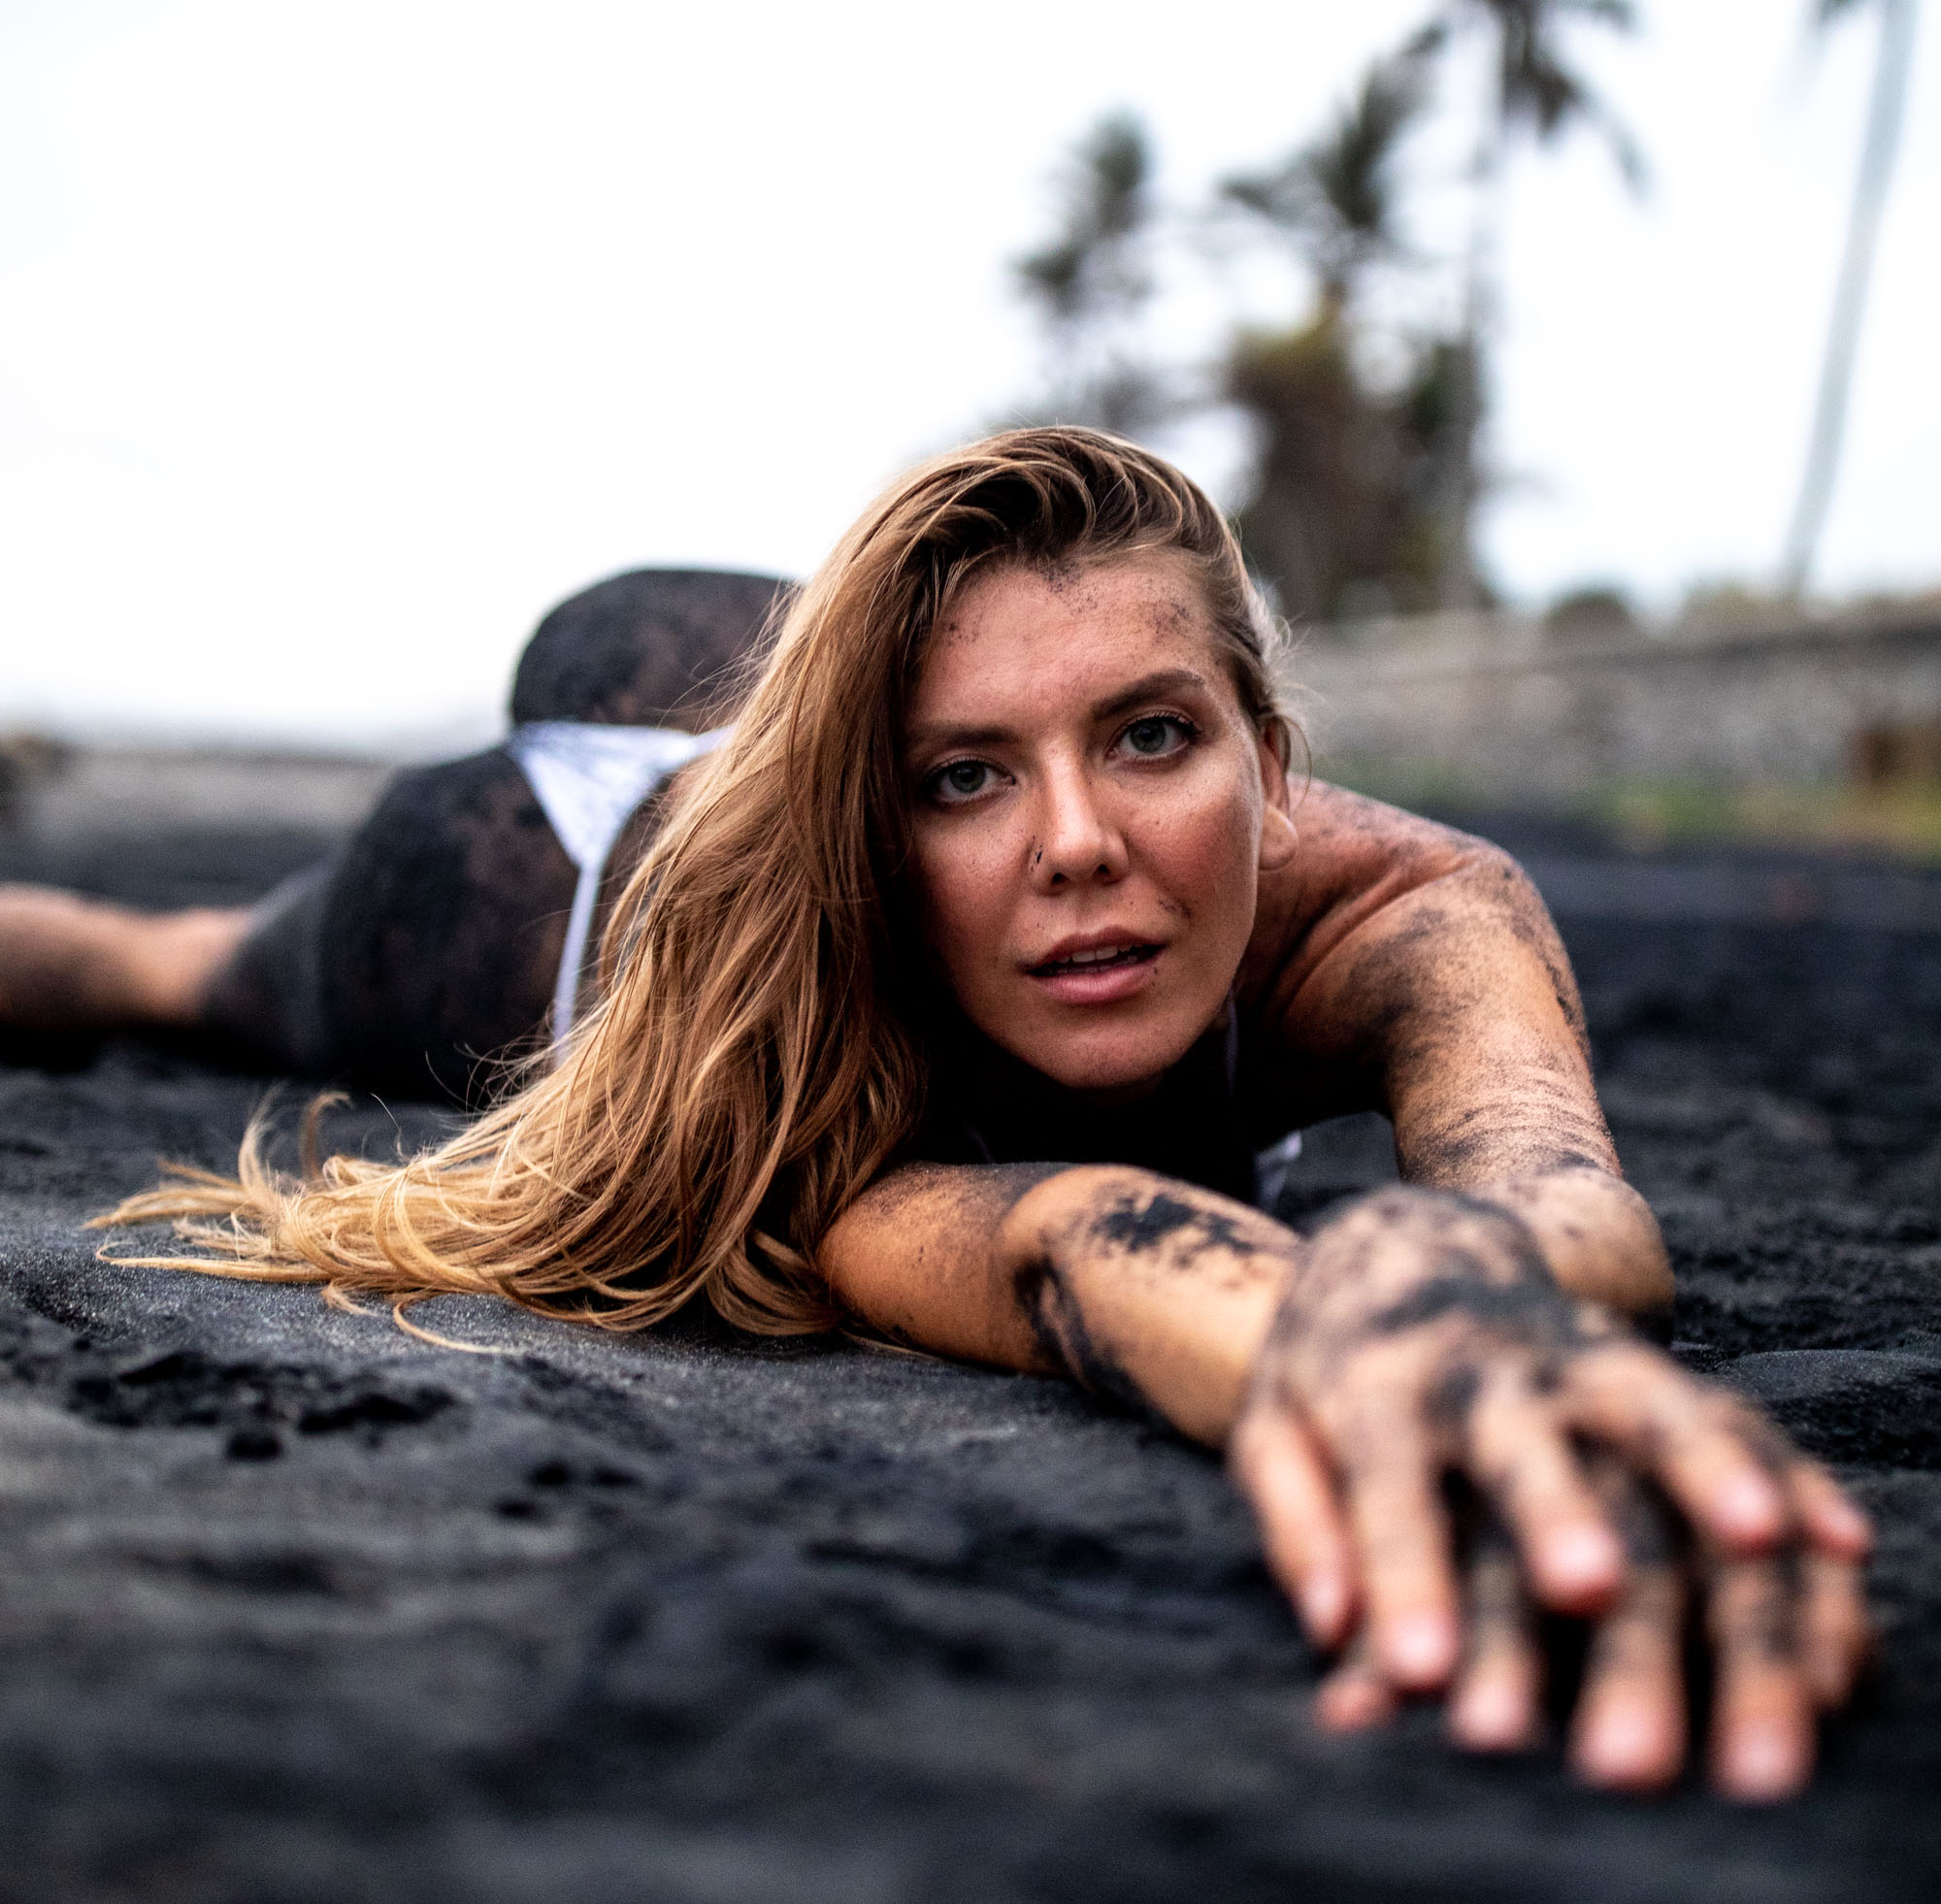 Bikini model rolling around and getting dirty on a black sand beach | Swimwear | Lifestyle Photography | Canggu, Bali, Indonesia